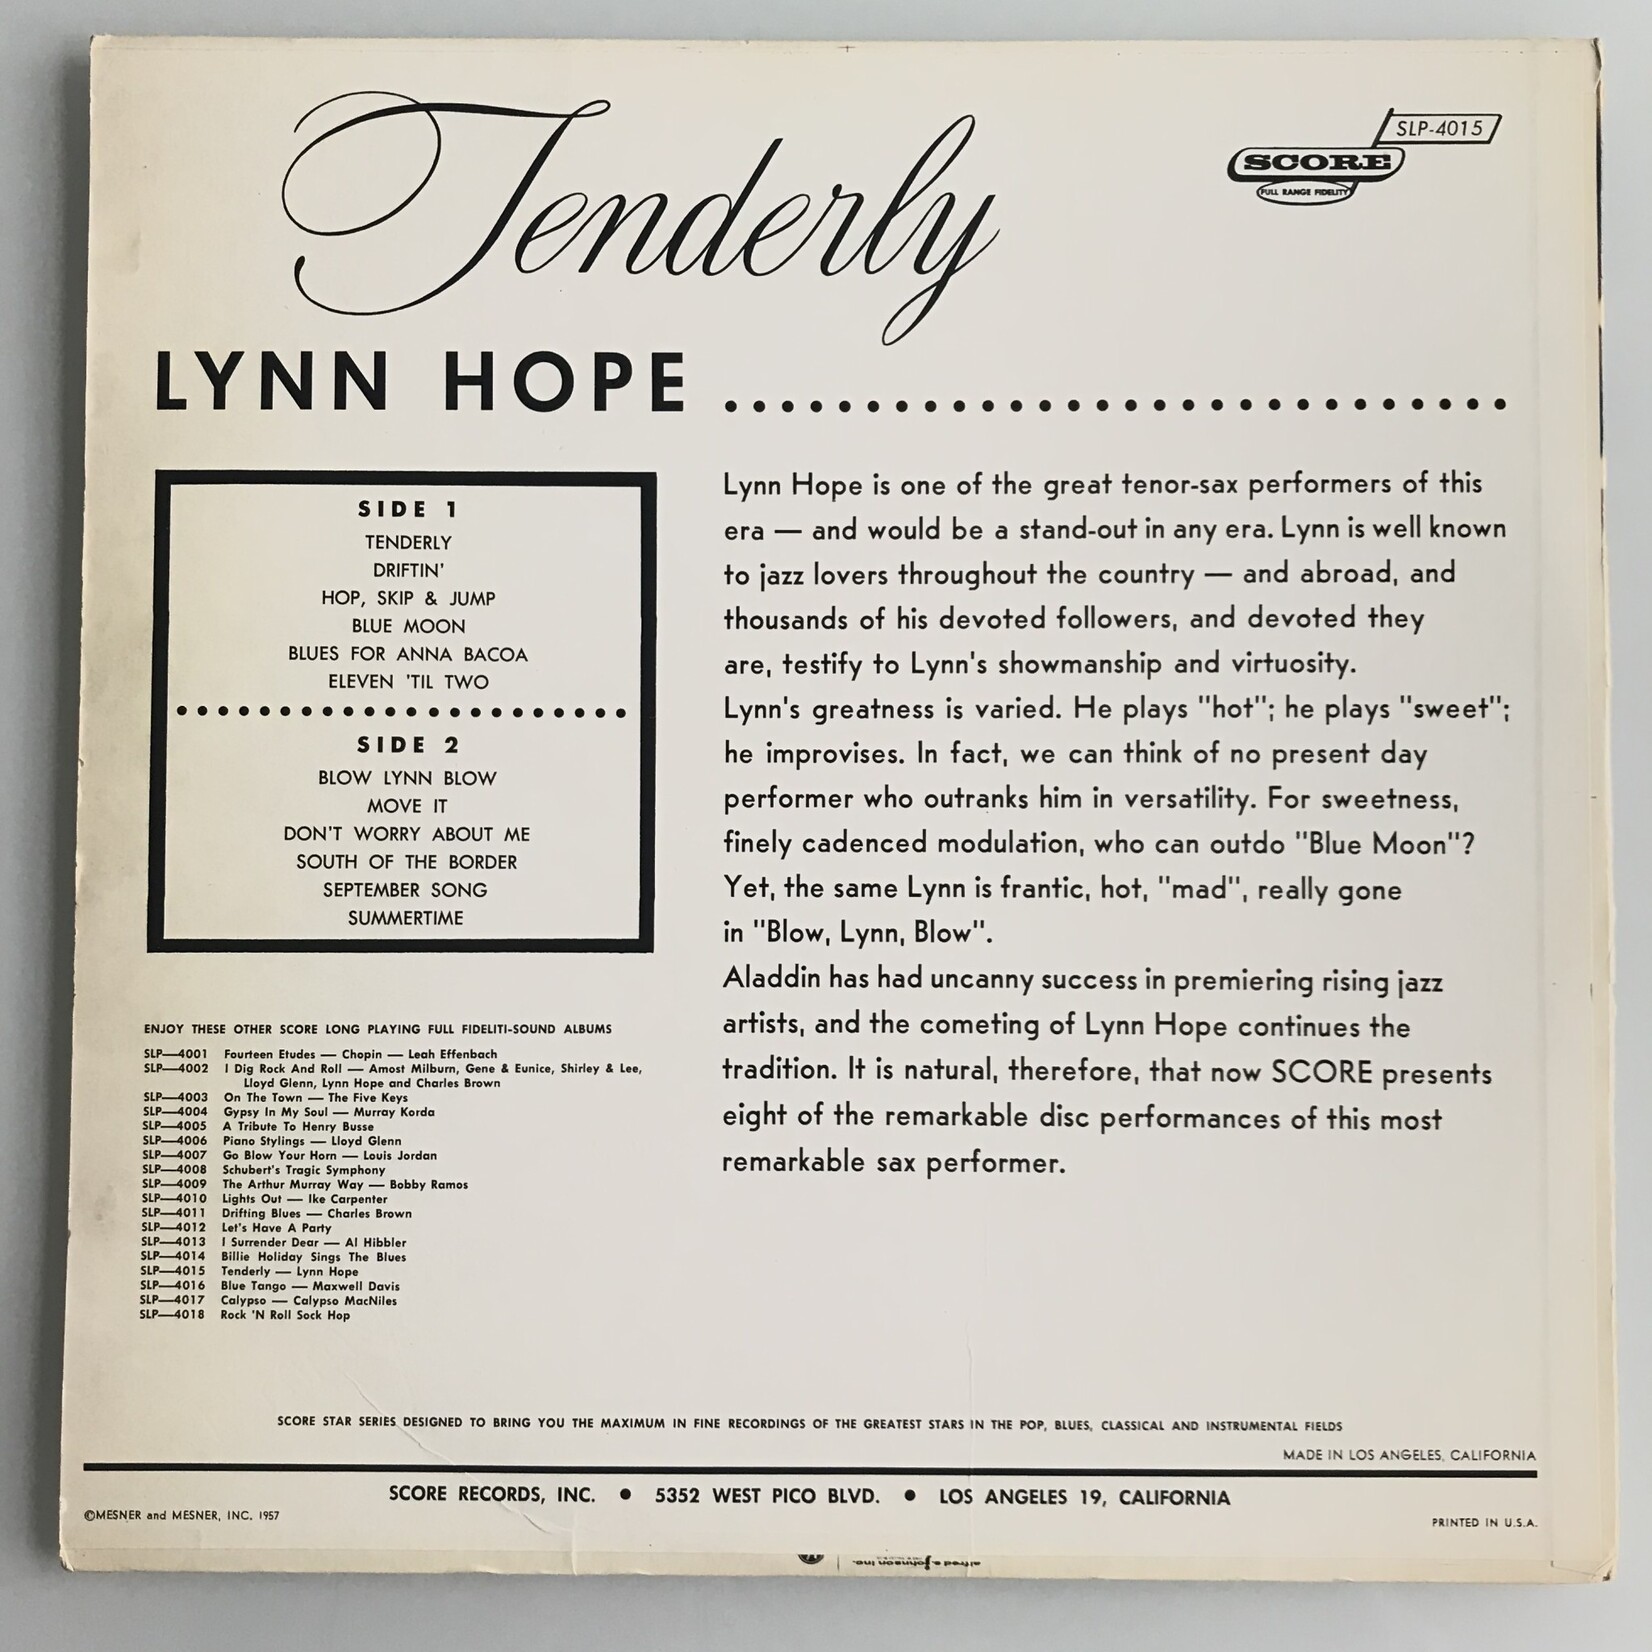 Lynn Hope - Tenderly - Vinyl LP (USED)